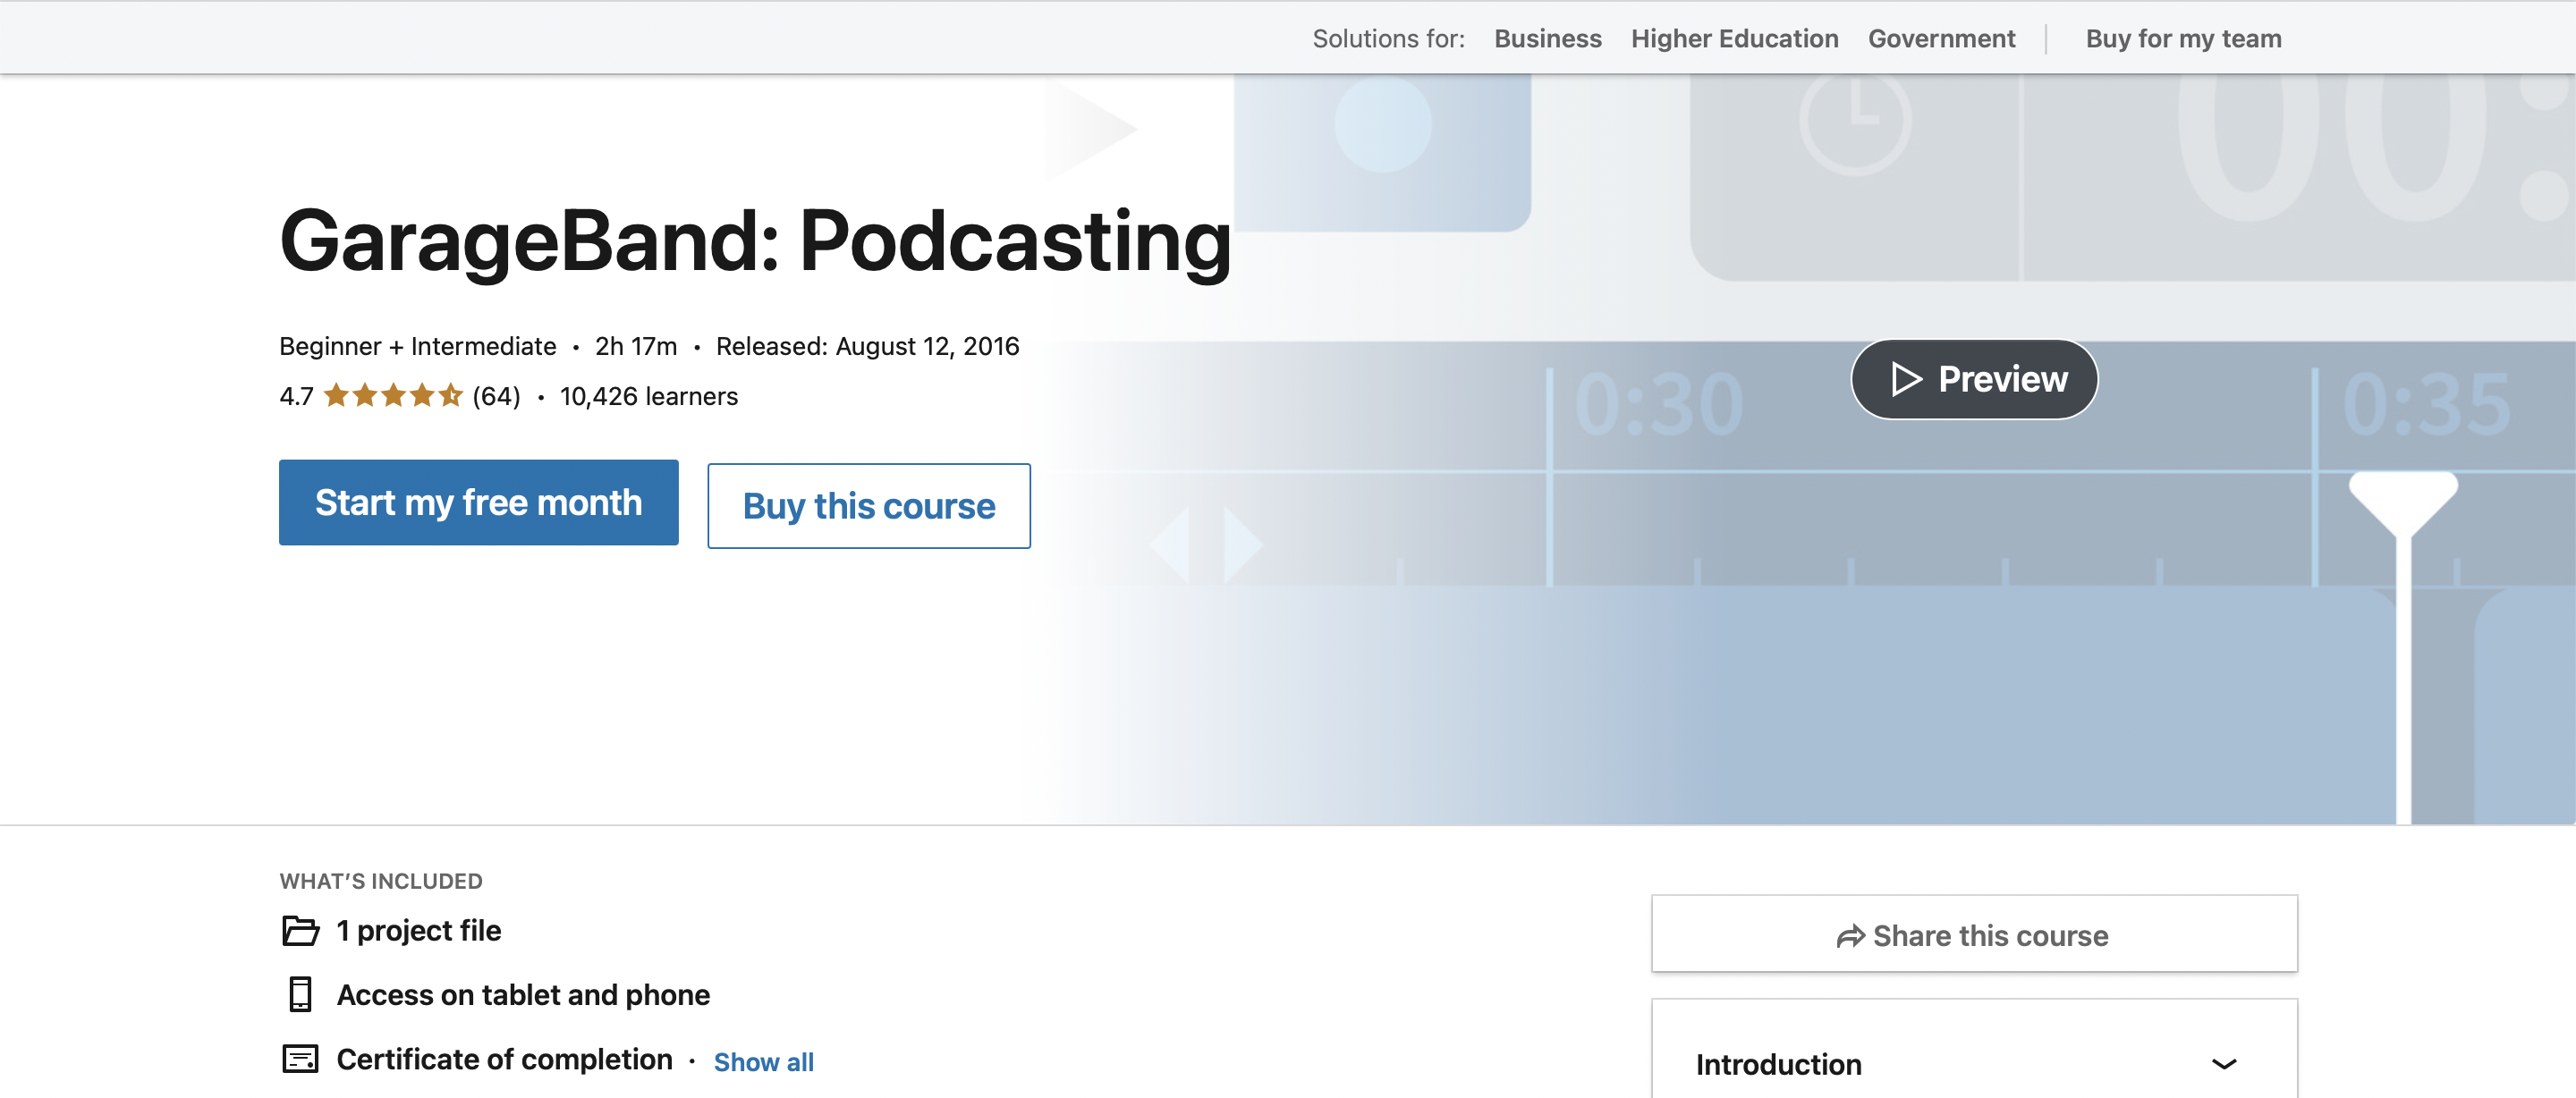 GarageBand Podcasting Training